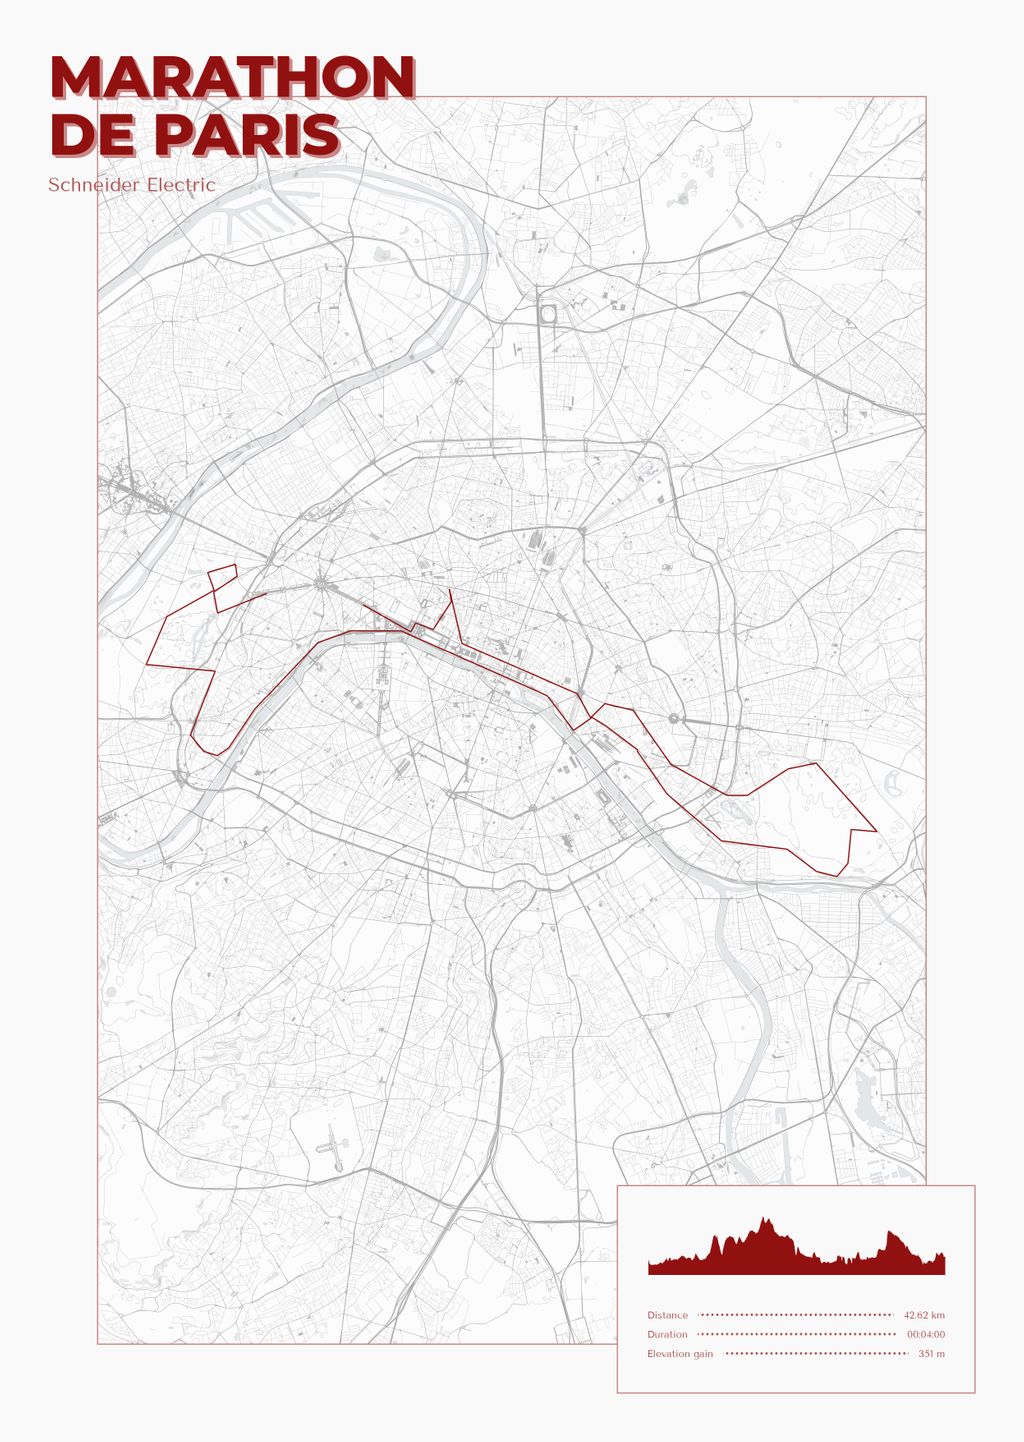 Póster con un mapa de Marathon 
de Paris